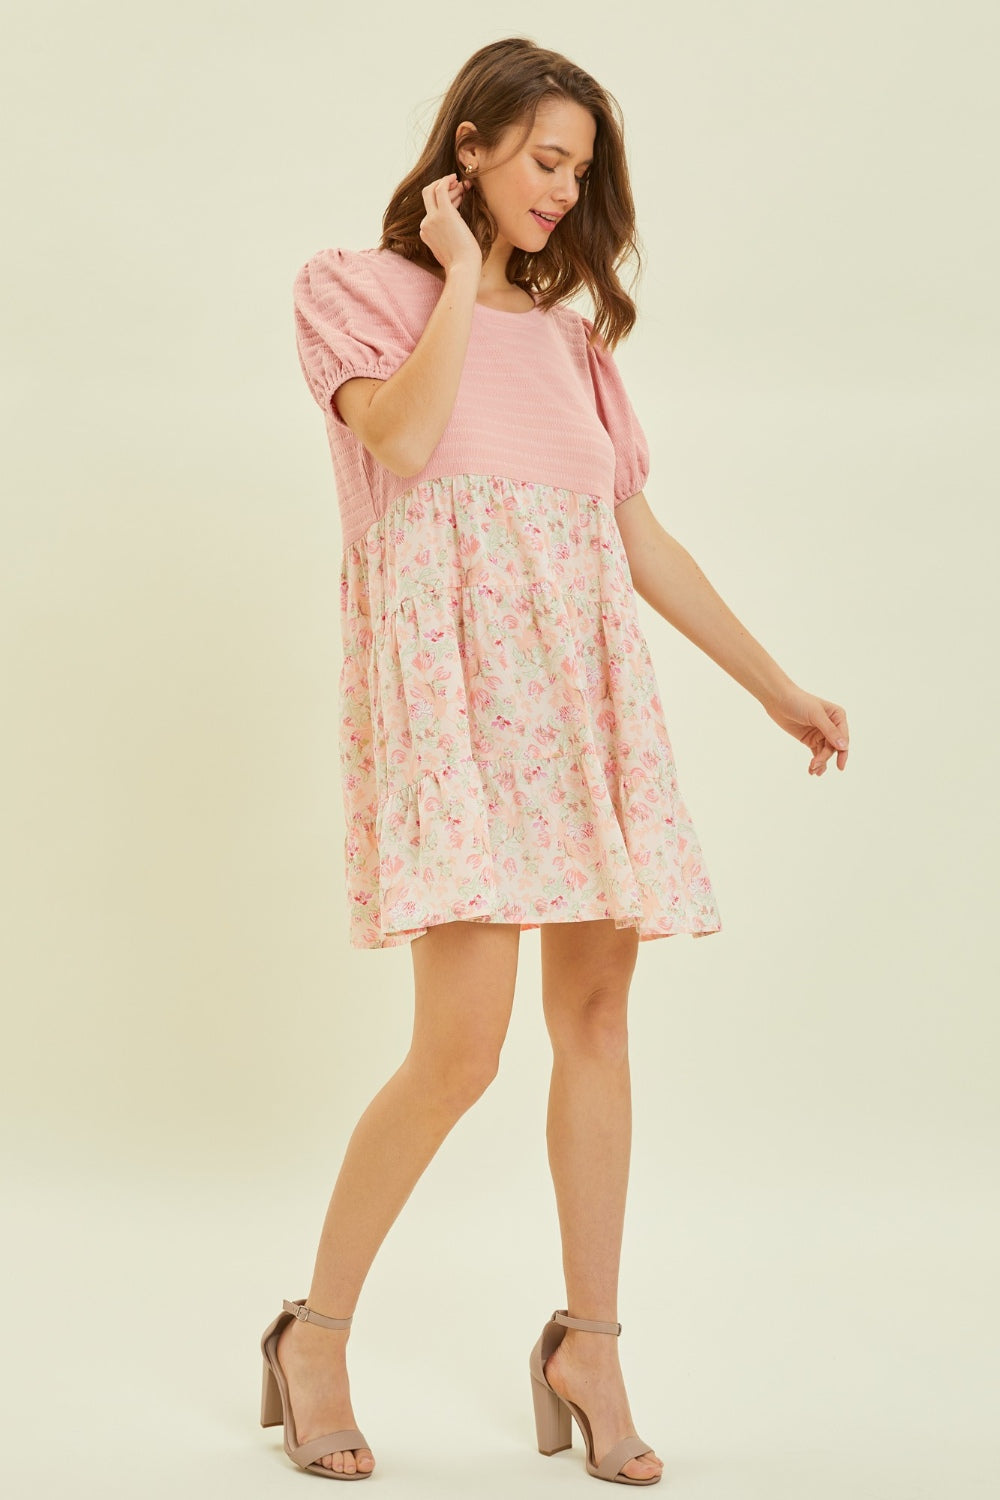 HEYSON Full Size Round Neck Floral Ruffle Hem Mini Dress - Charming Summer Elegance